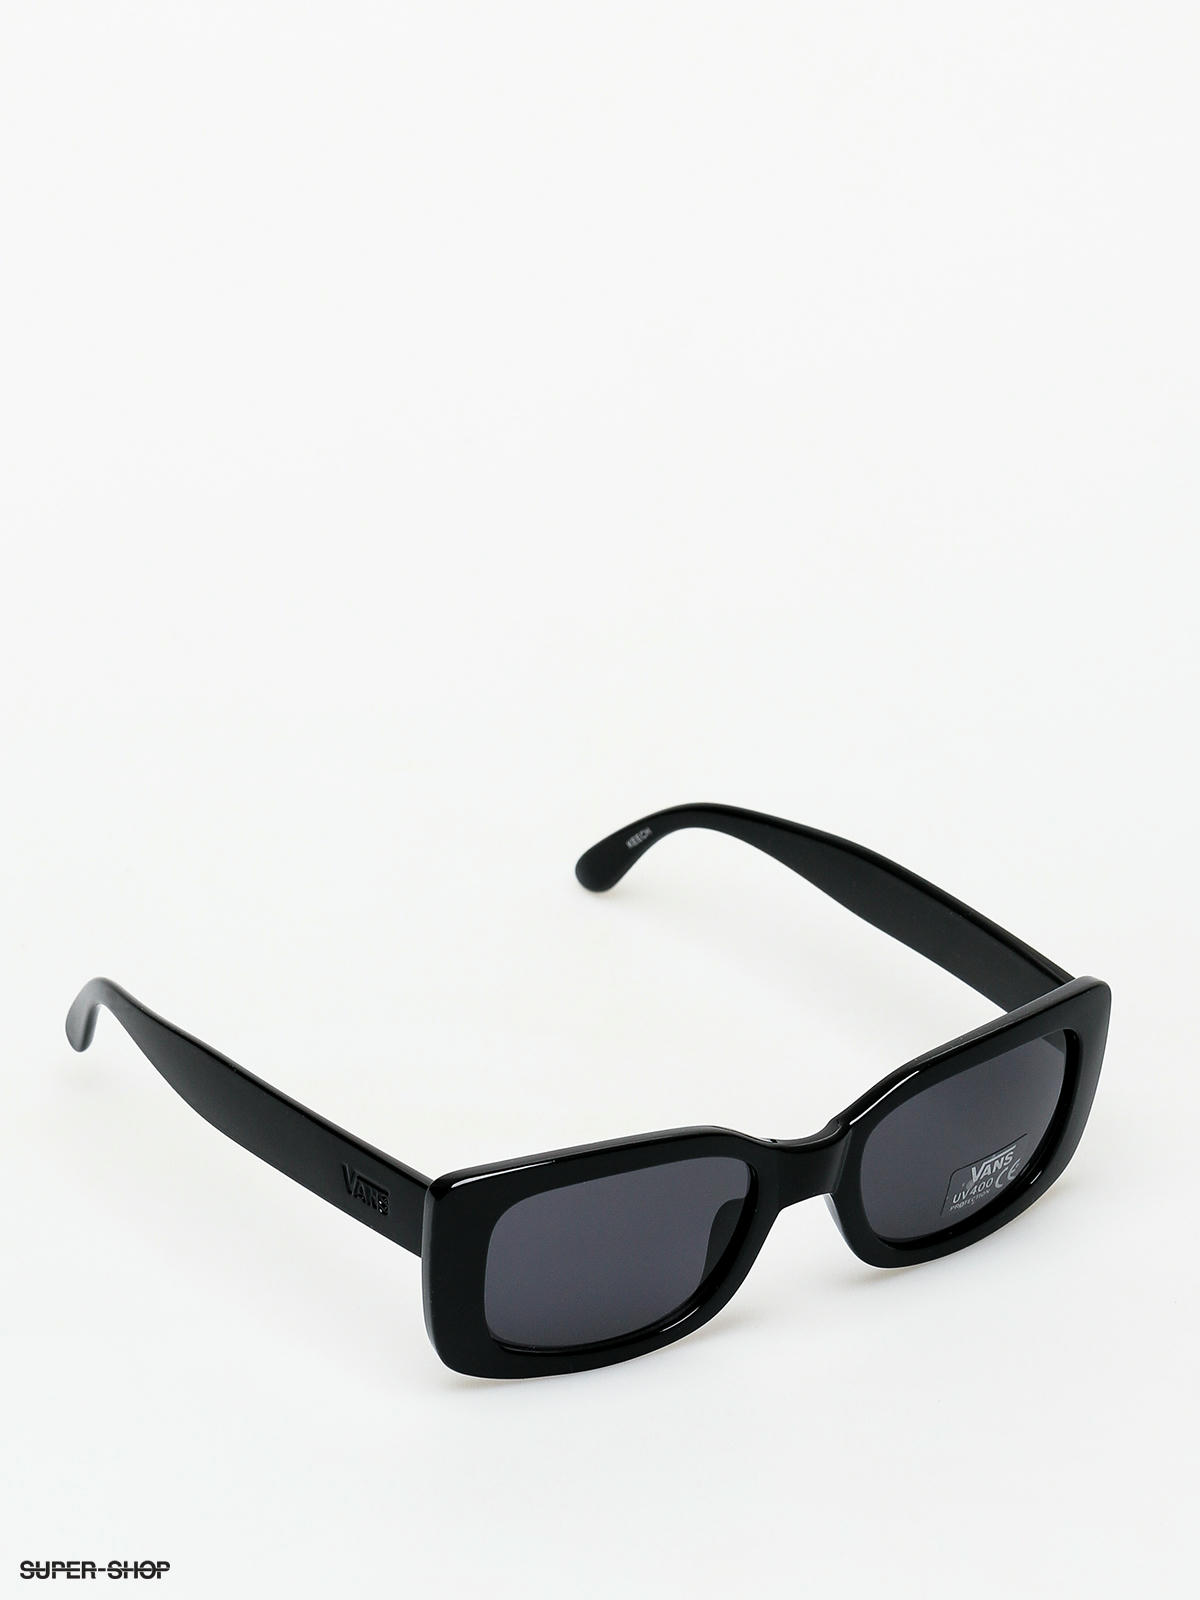 vans keech square sunglasses